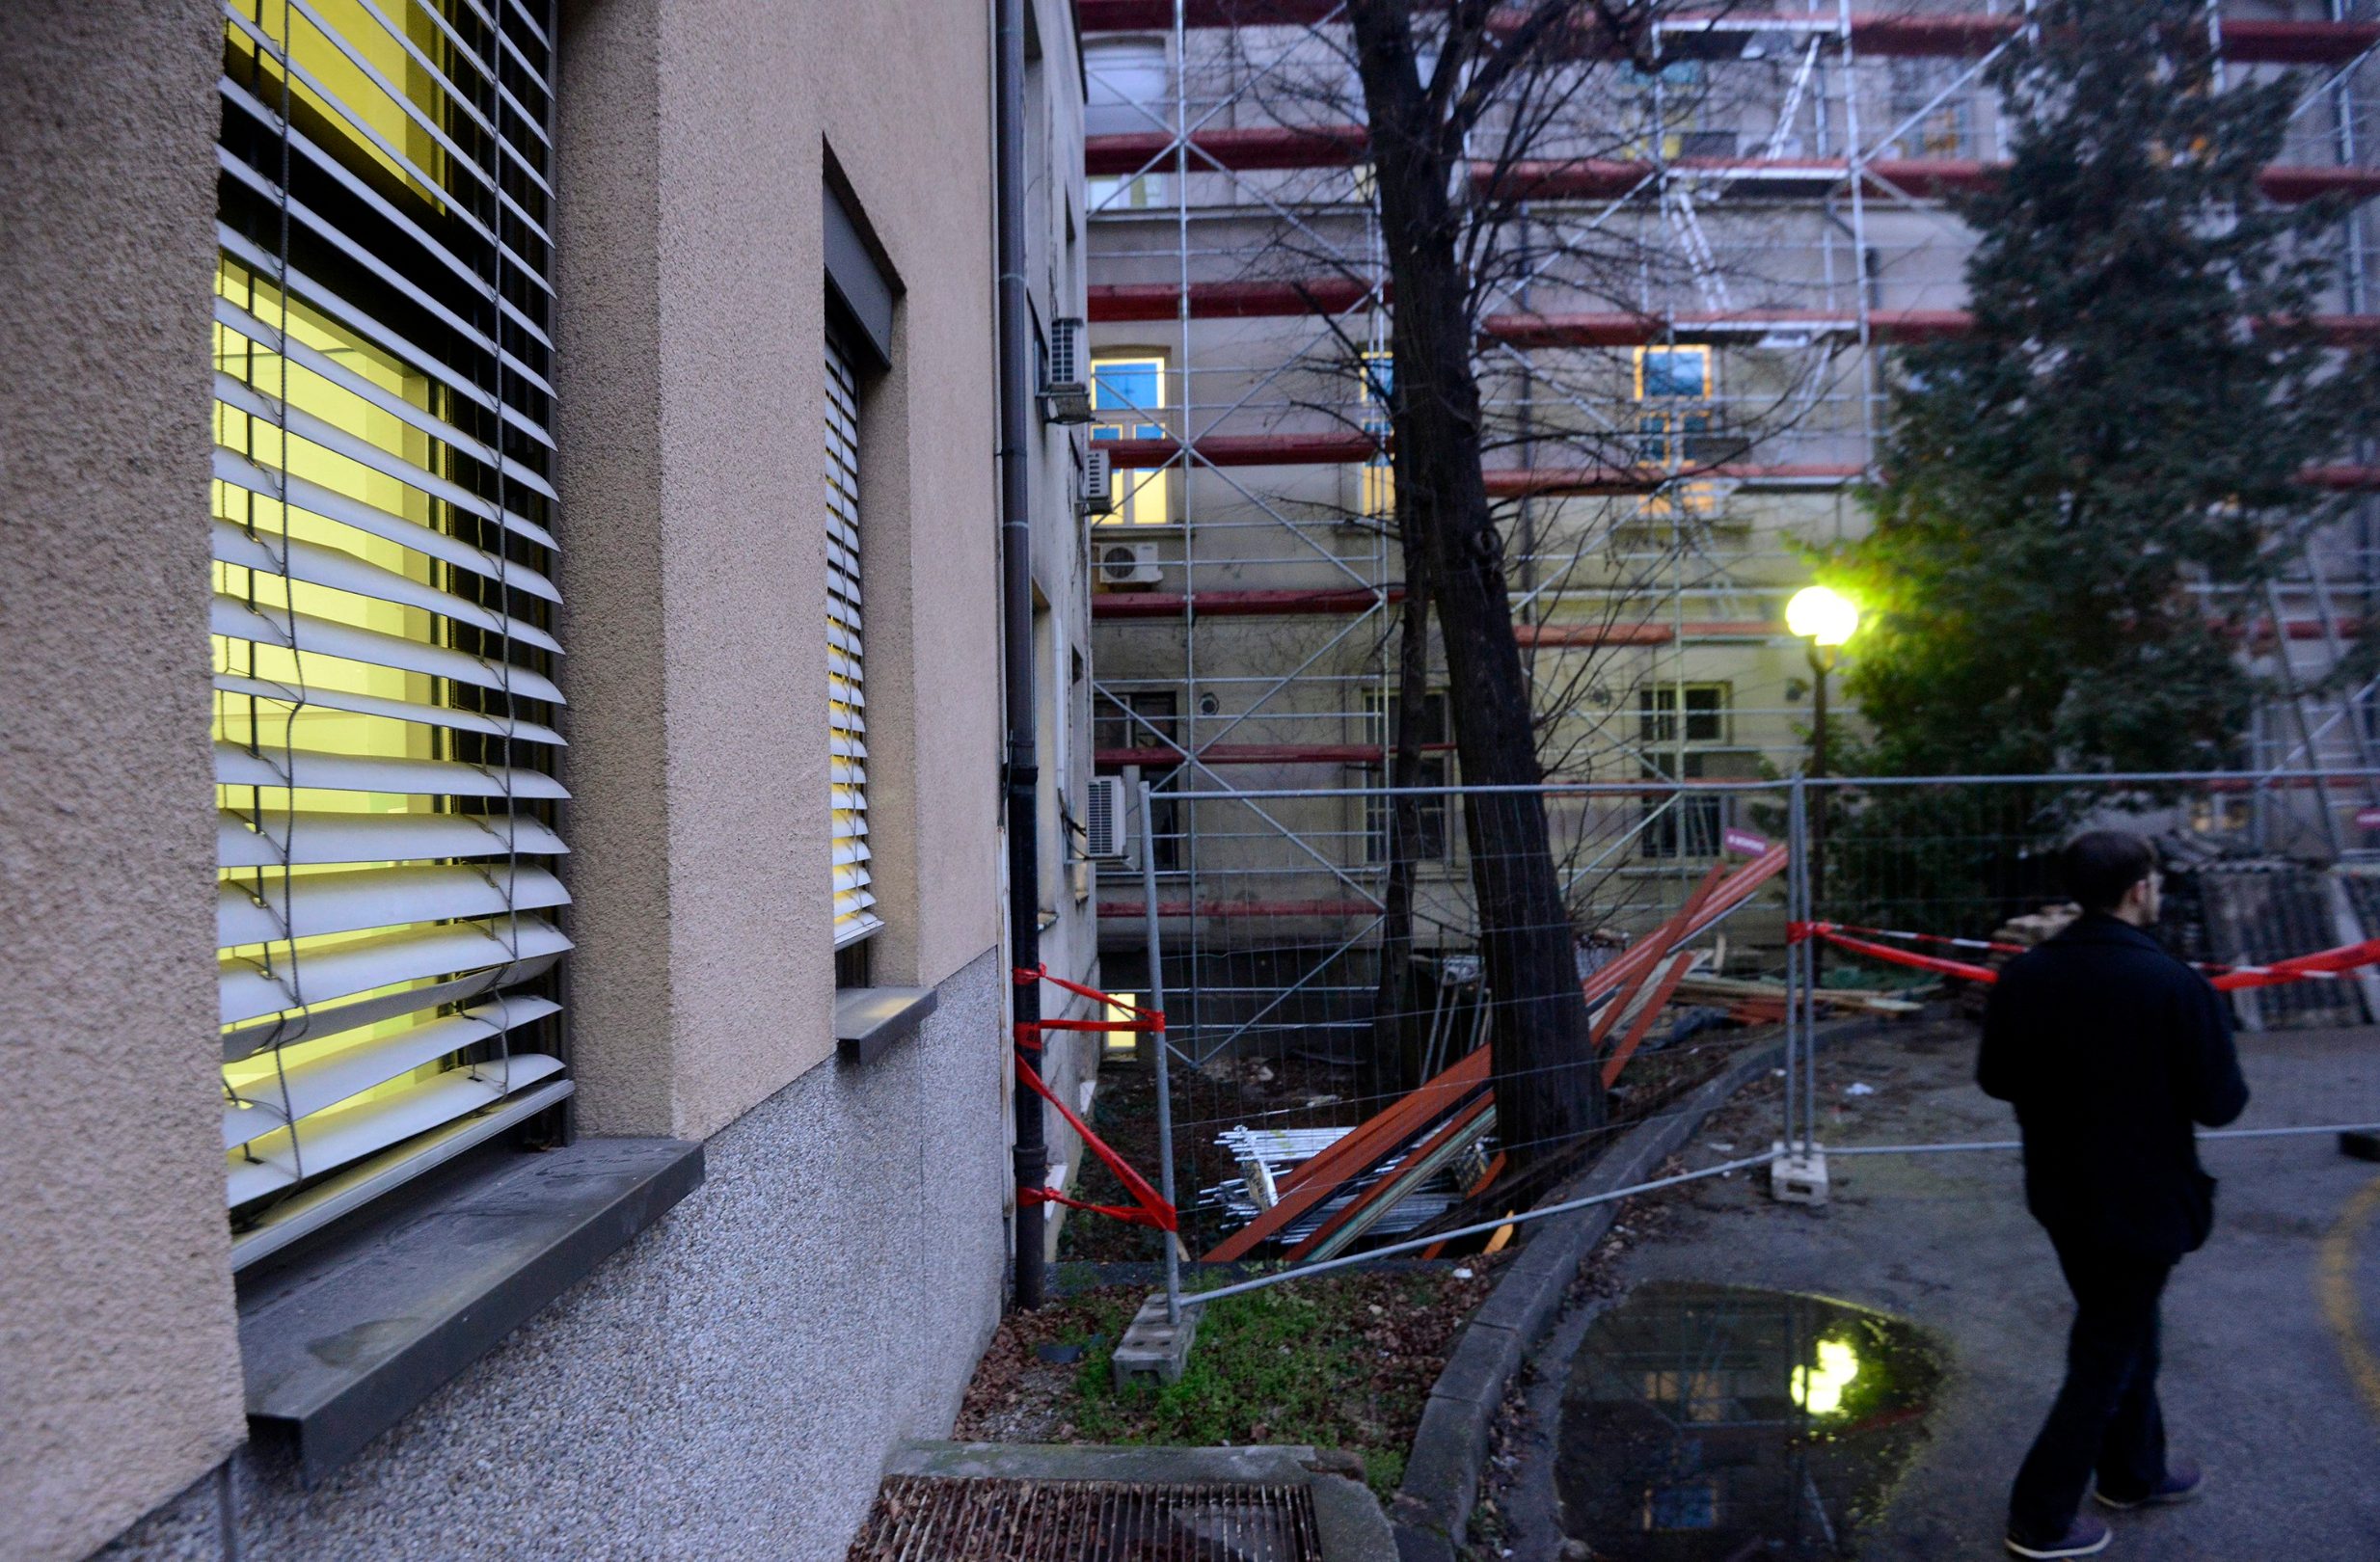 Zagreb, 200120.
Wc, prozor i zid u bolnici Sestara milisrdnica preko kojeg je pobjegao pritvorenik Ivica Djordjevic.
Foto: Bruno Konjevic / CROPIX